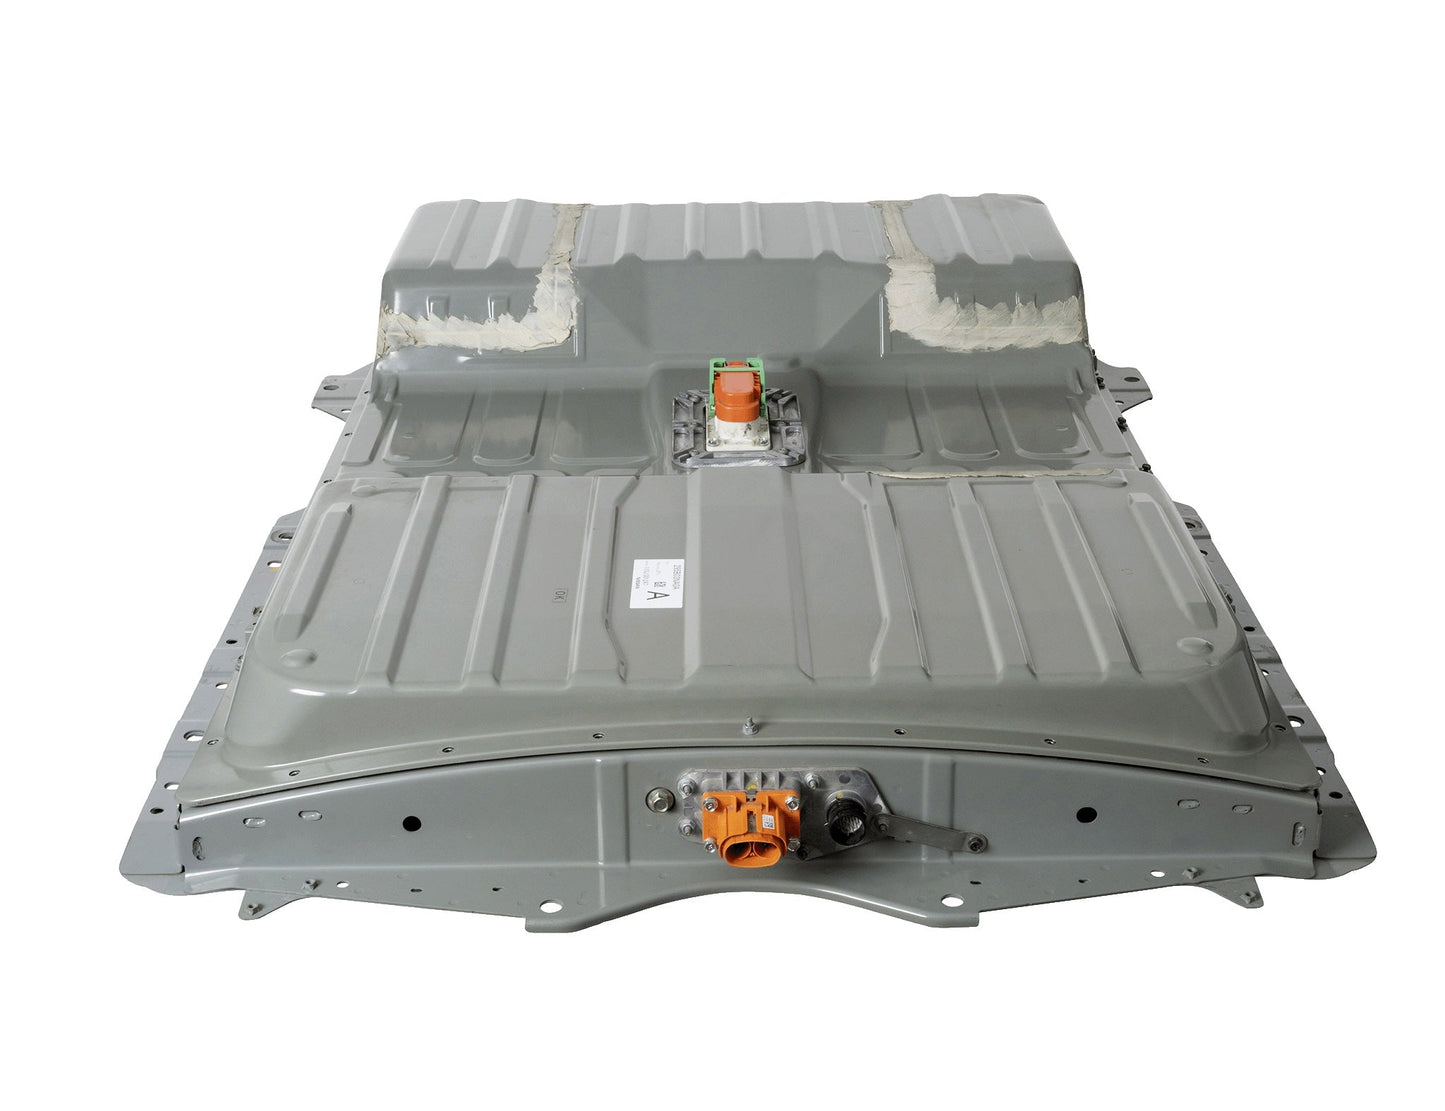 2011-2012 Nissan Leaf Gen1 G1 - Gen2 G2 Li-Ion 24kWh Battery Replacement  Service